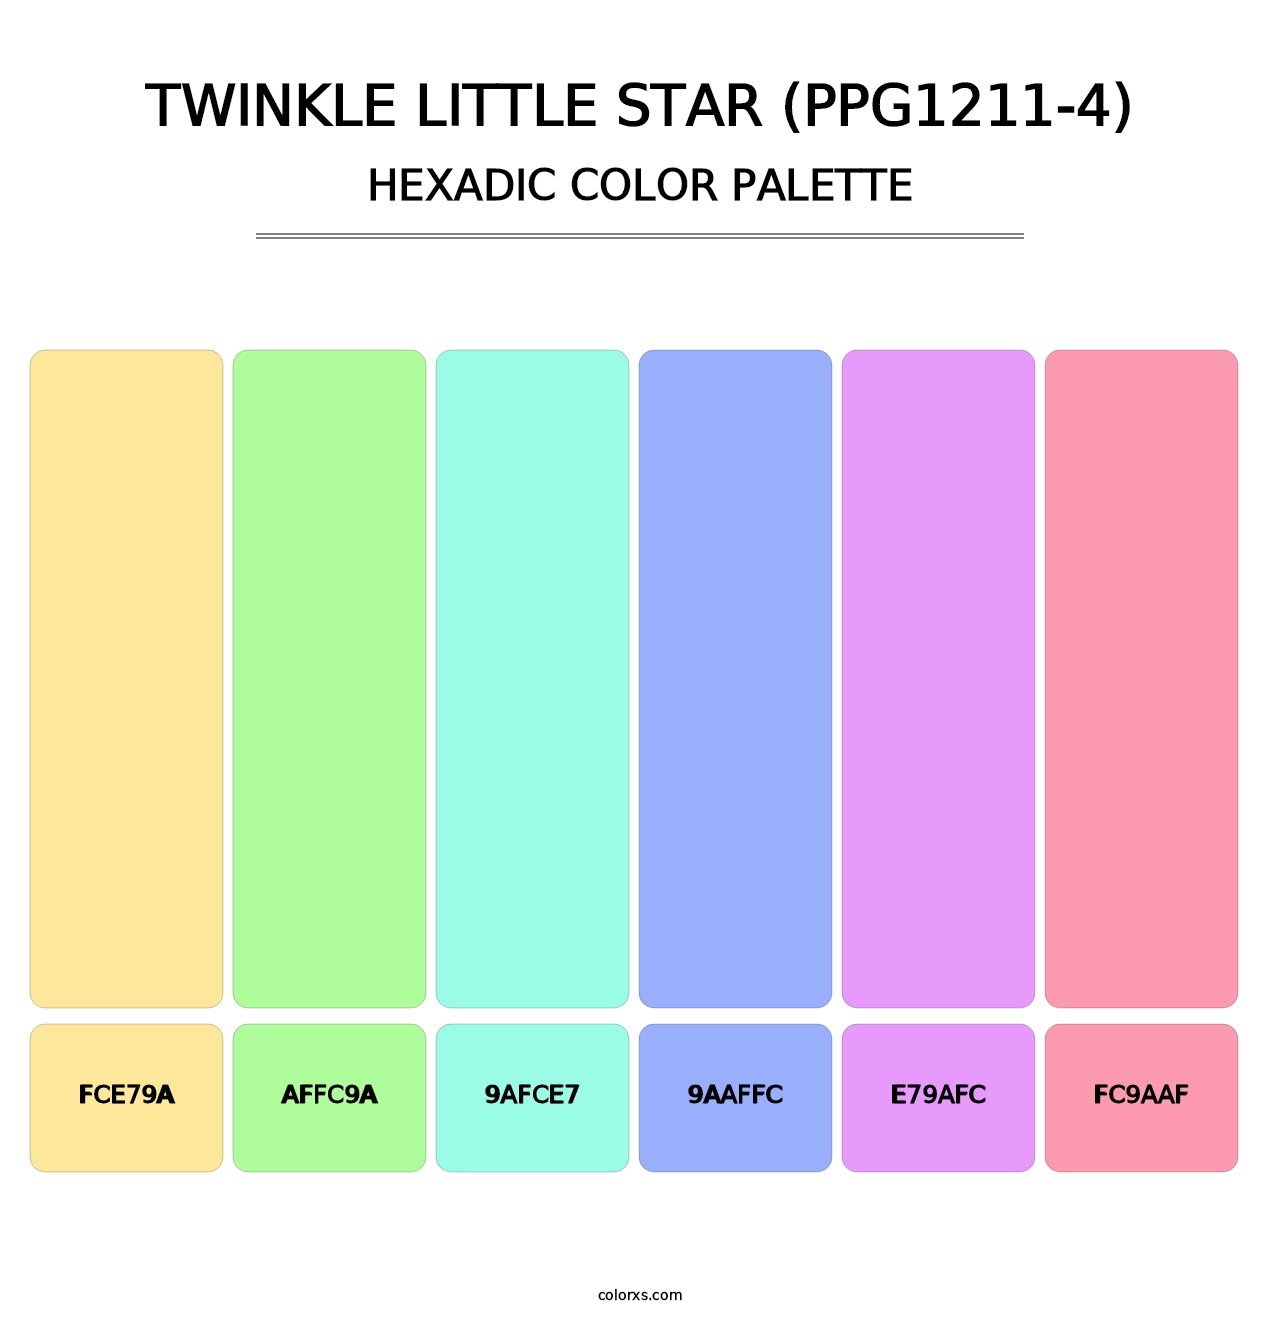 Twinkle Little Star (PPG1211-4) - Hexadic Color Palette